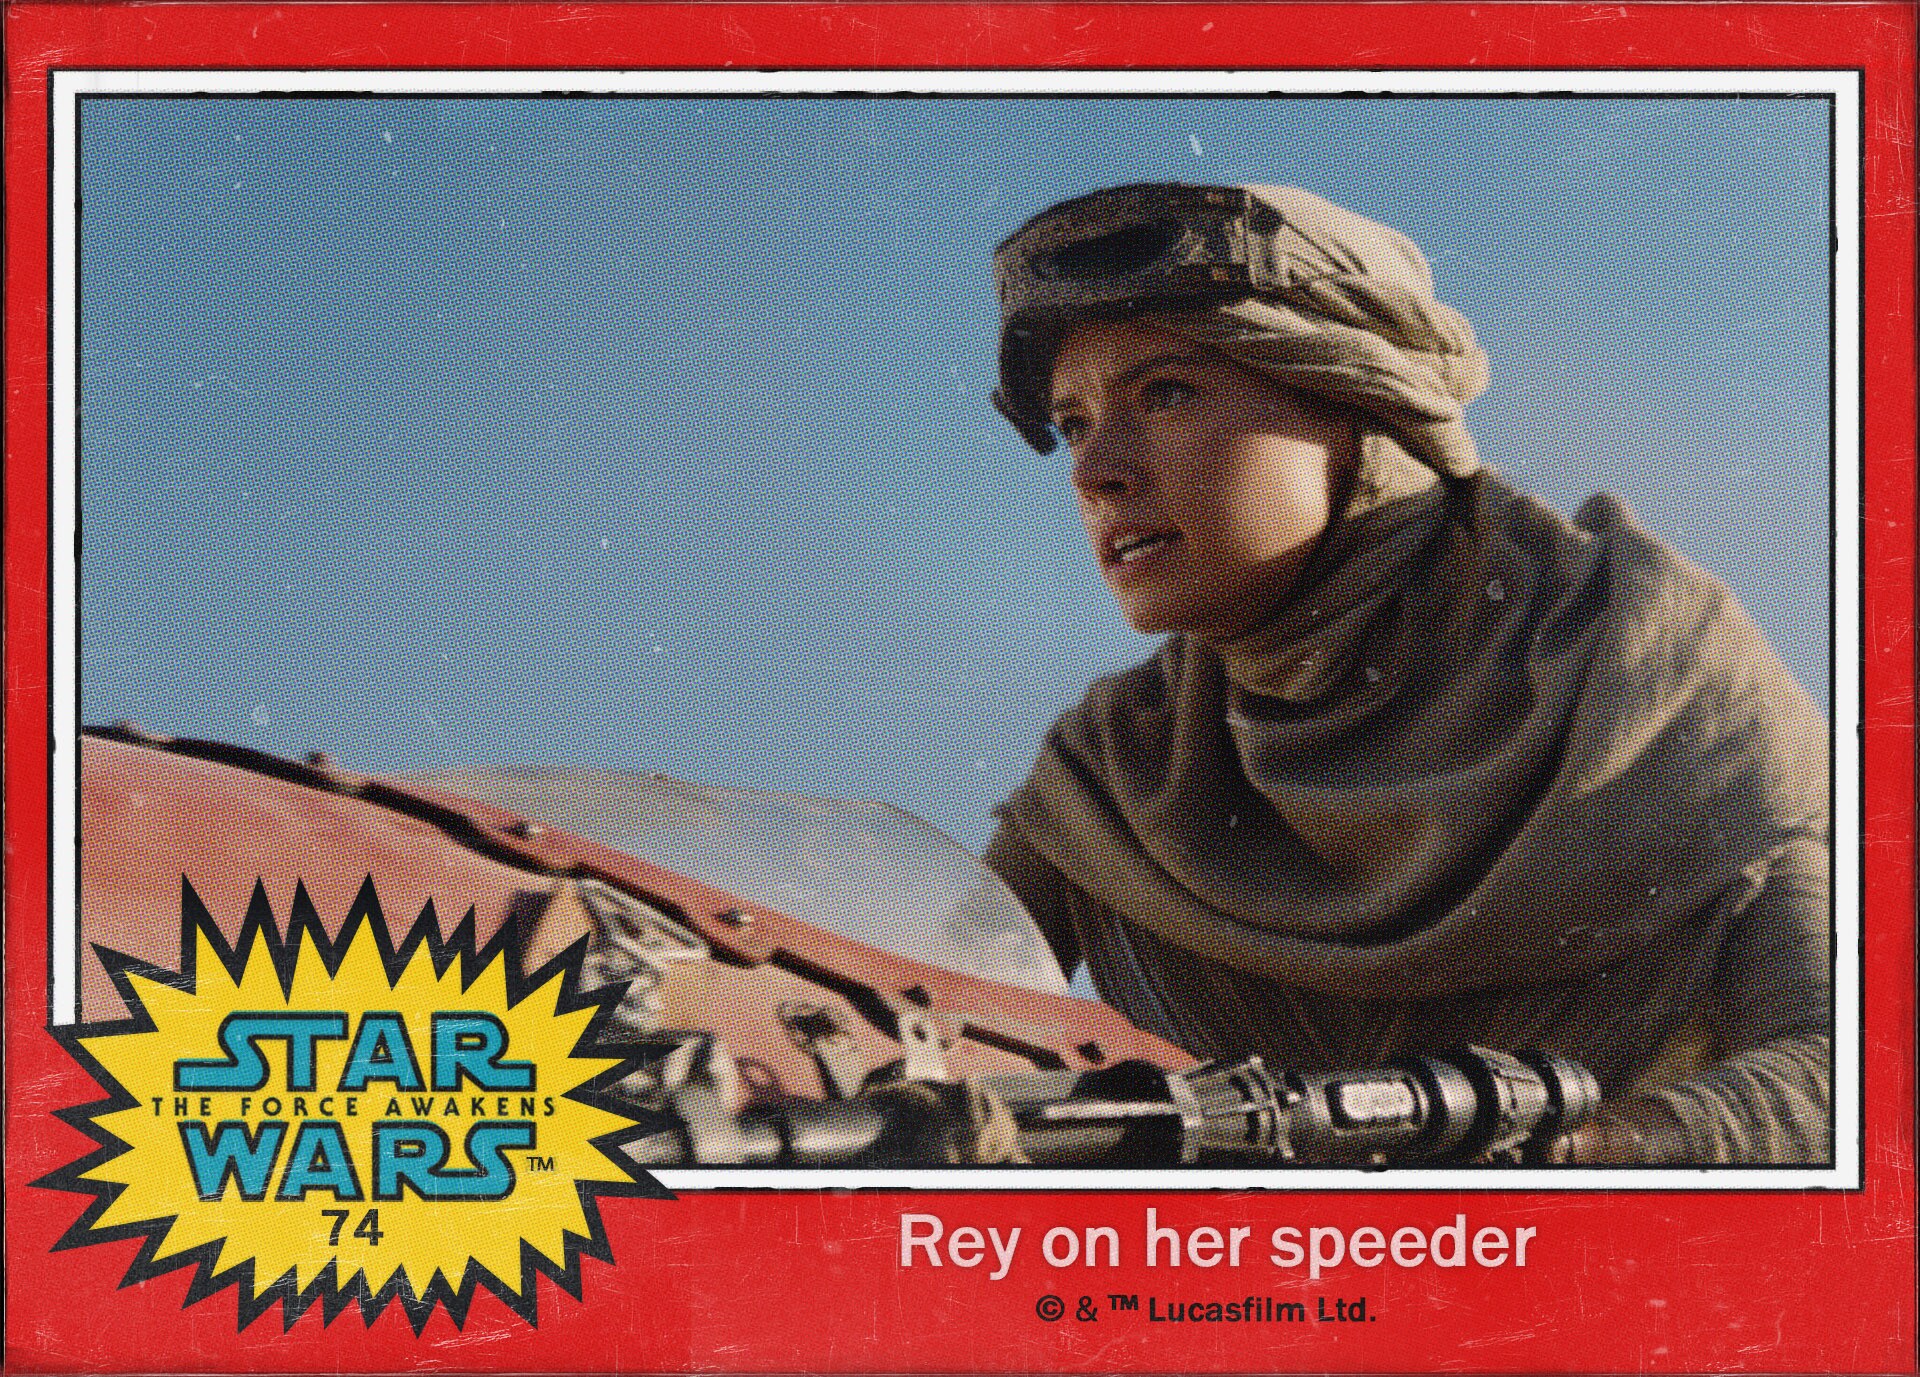 Rey on her speeder! Star Wars: The Force Awakens Digital Trading Card #74